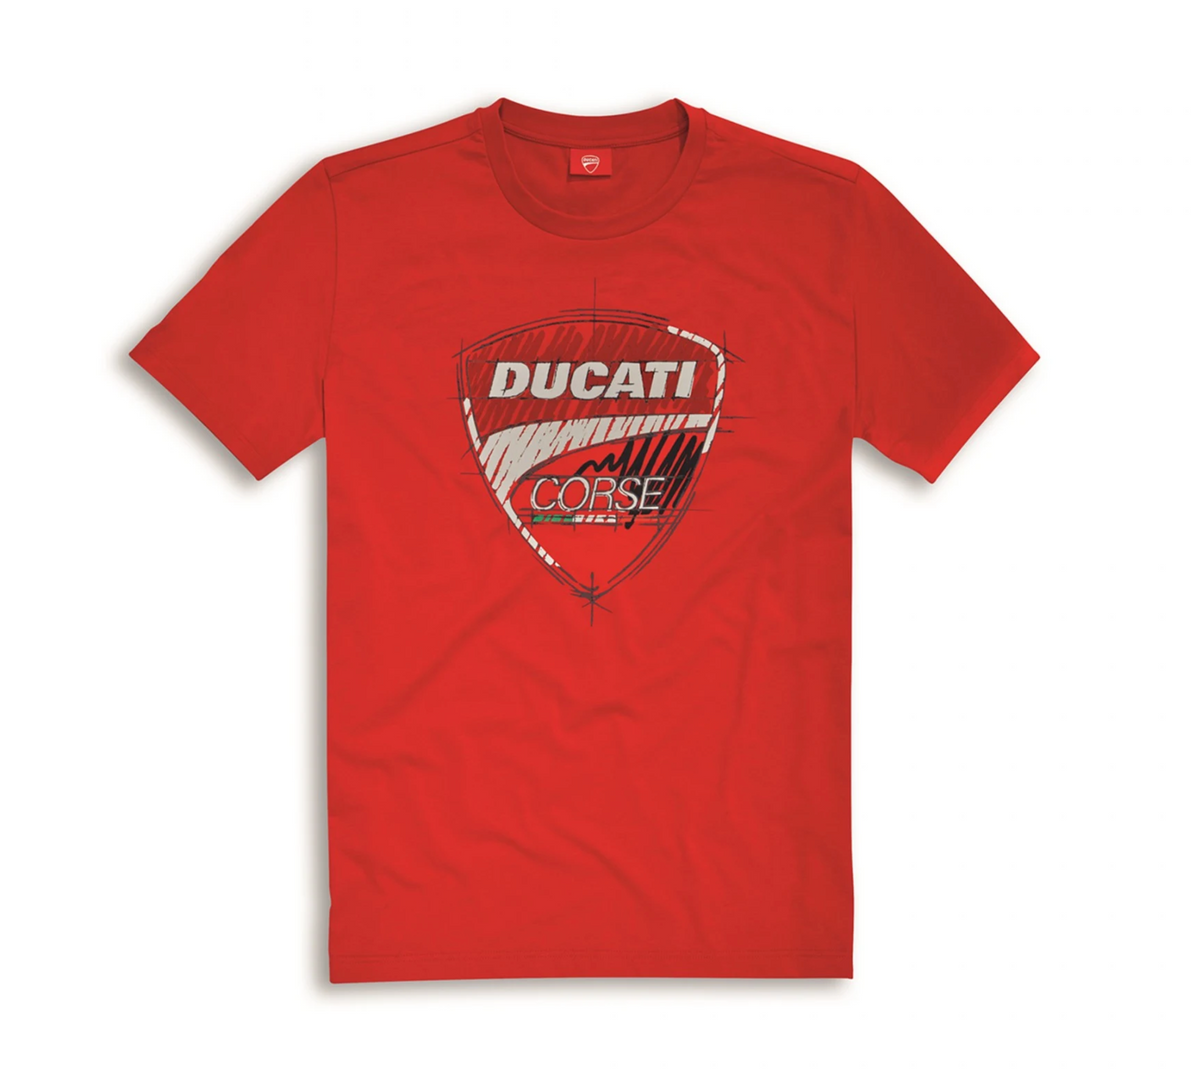 Ducati Corse Sketch T-shirt